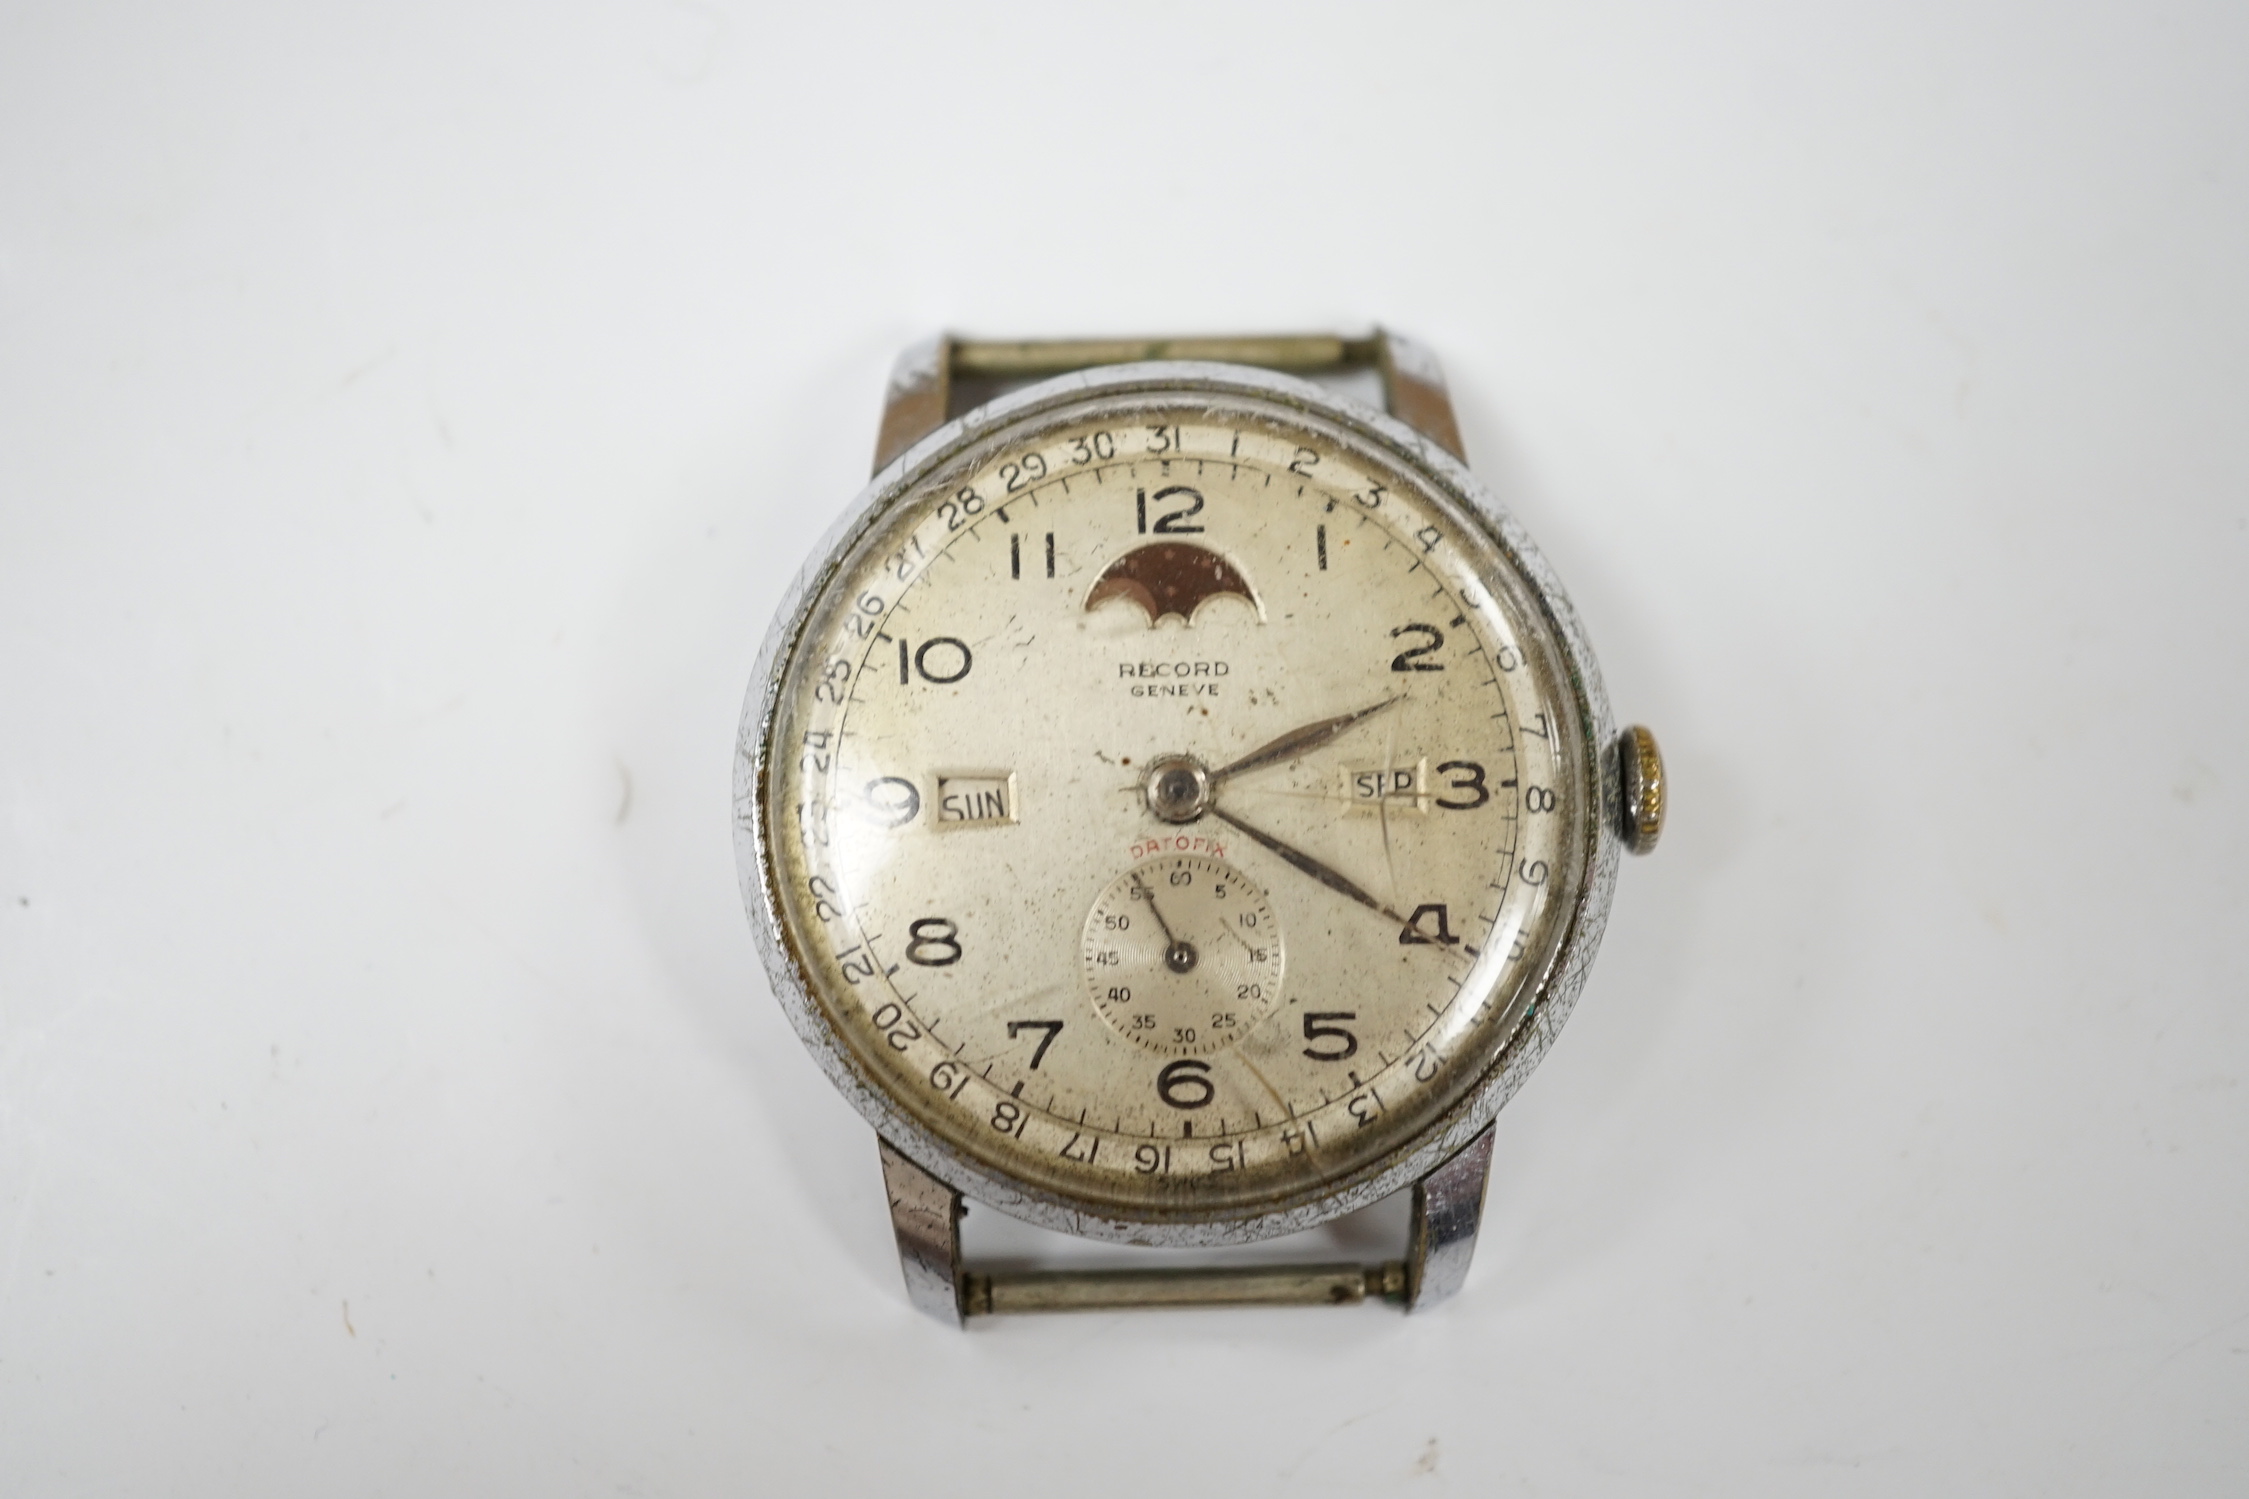 A gentleman's stainless steel Record calendar moonphase manual wind wrist watch, no strap, case diameter 35mm.